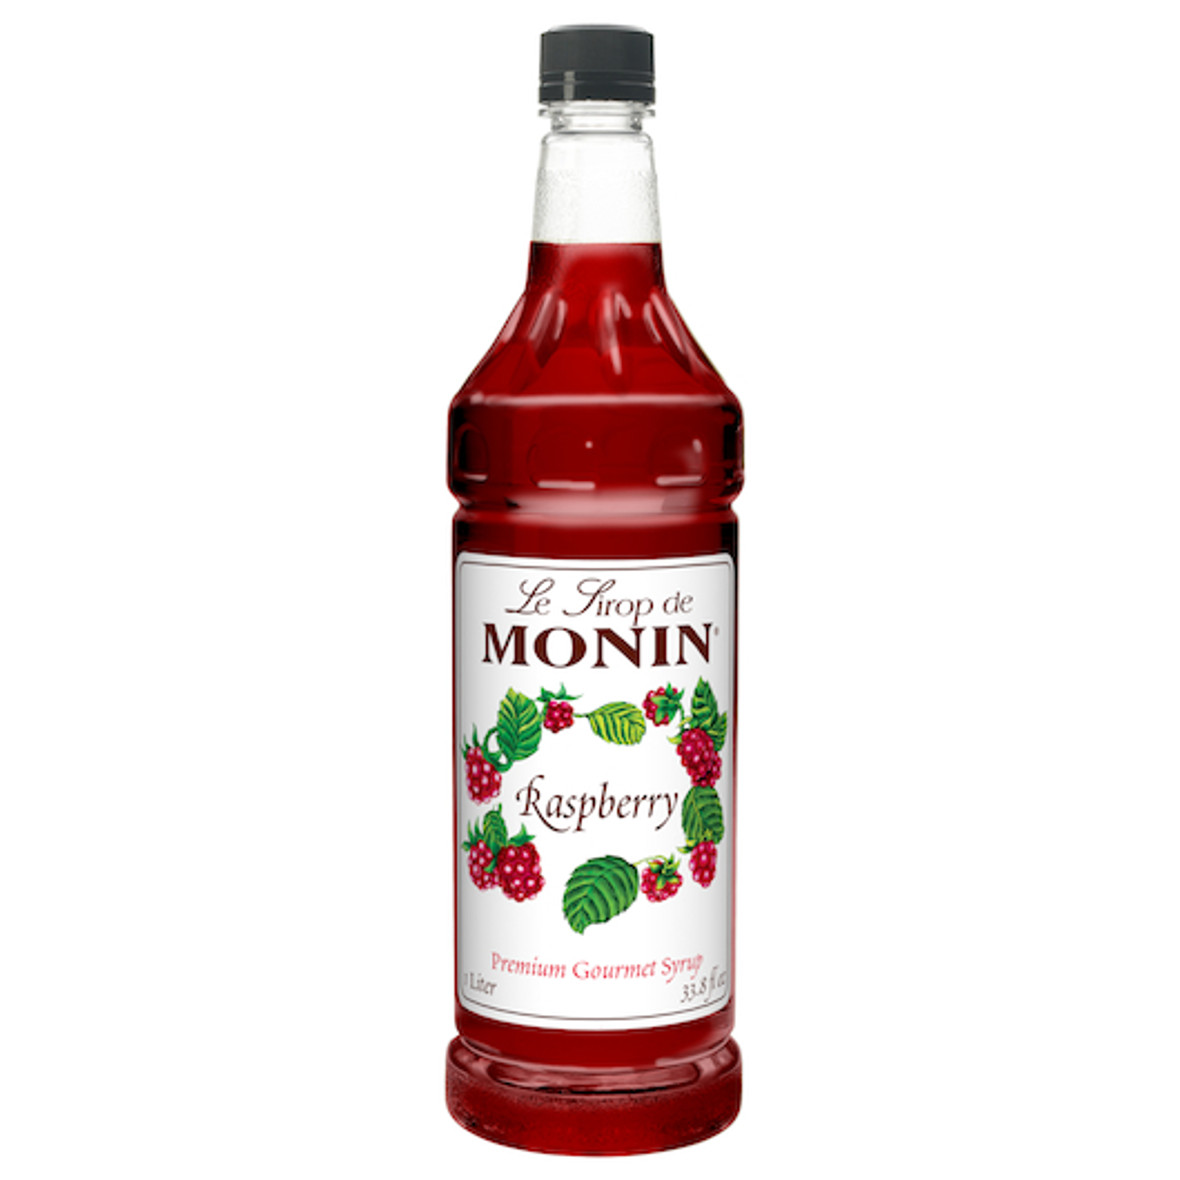 Monin Raspberry Premium Gourmet Syrup, 1 Liter Bottle - 4 Per Case